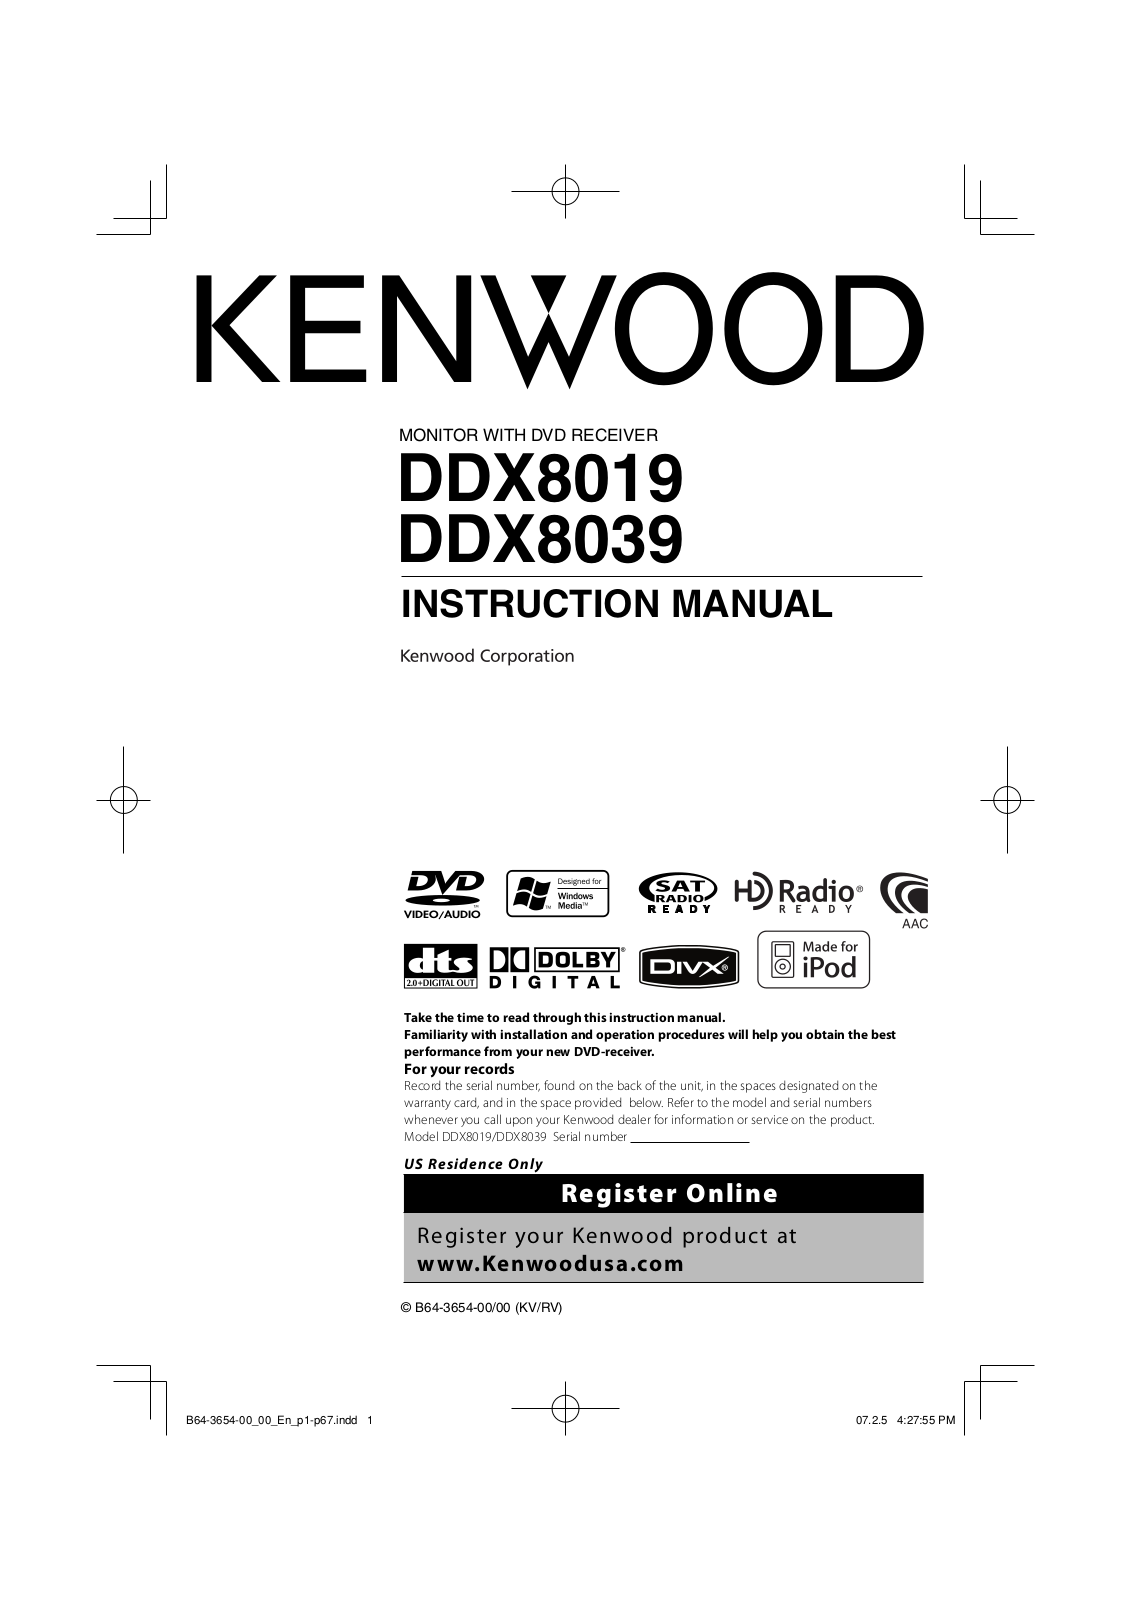 Kenwood DDX8019, DDX8039 Instruction Manual